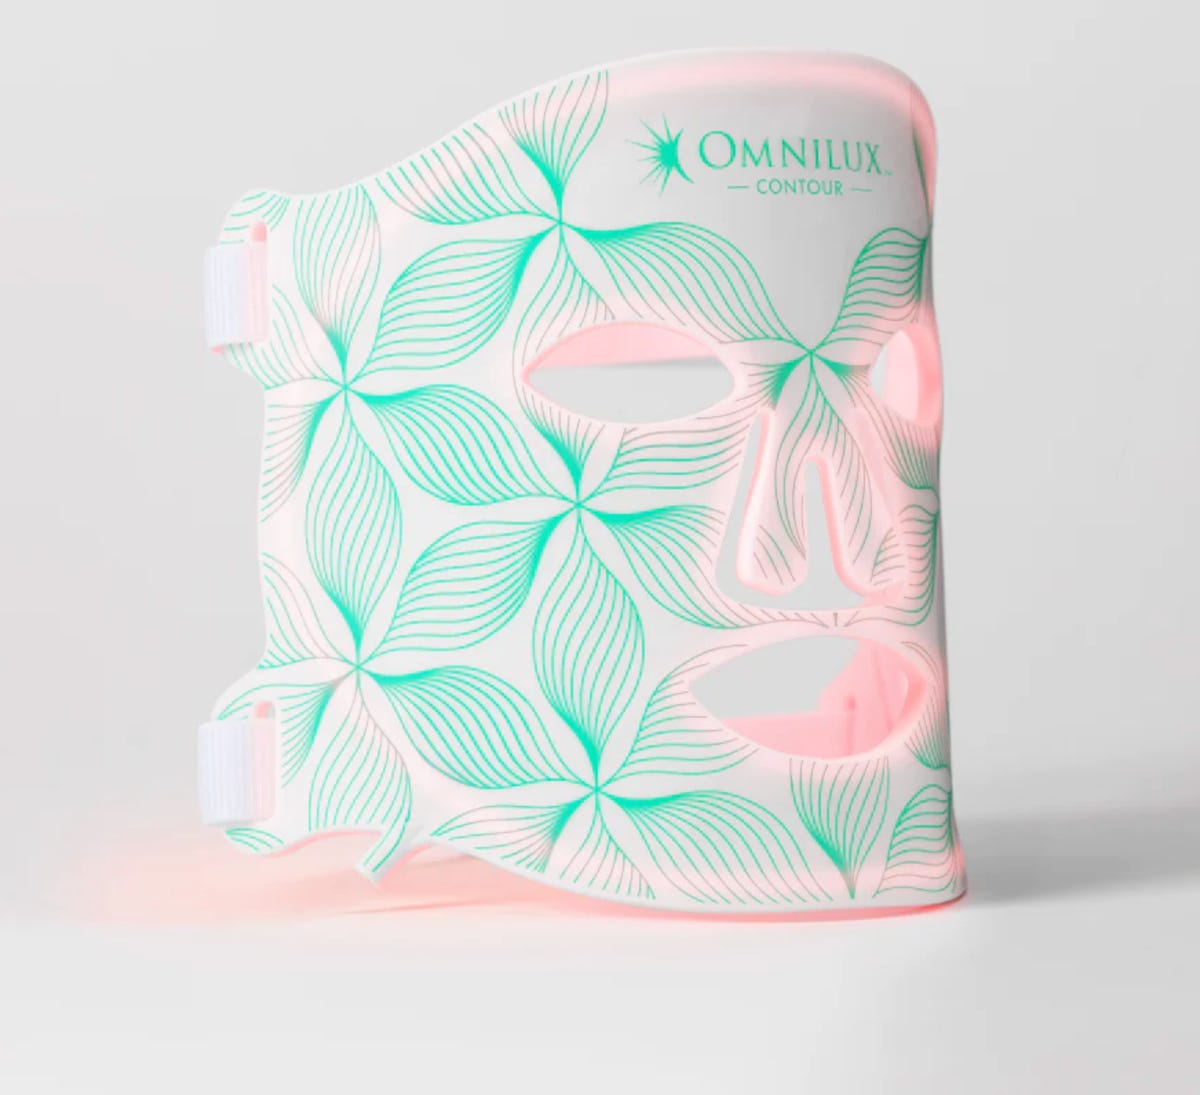 An Omnilux LED face mask